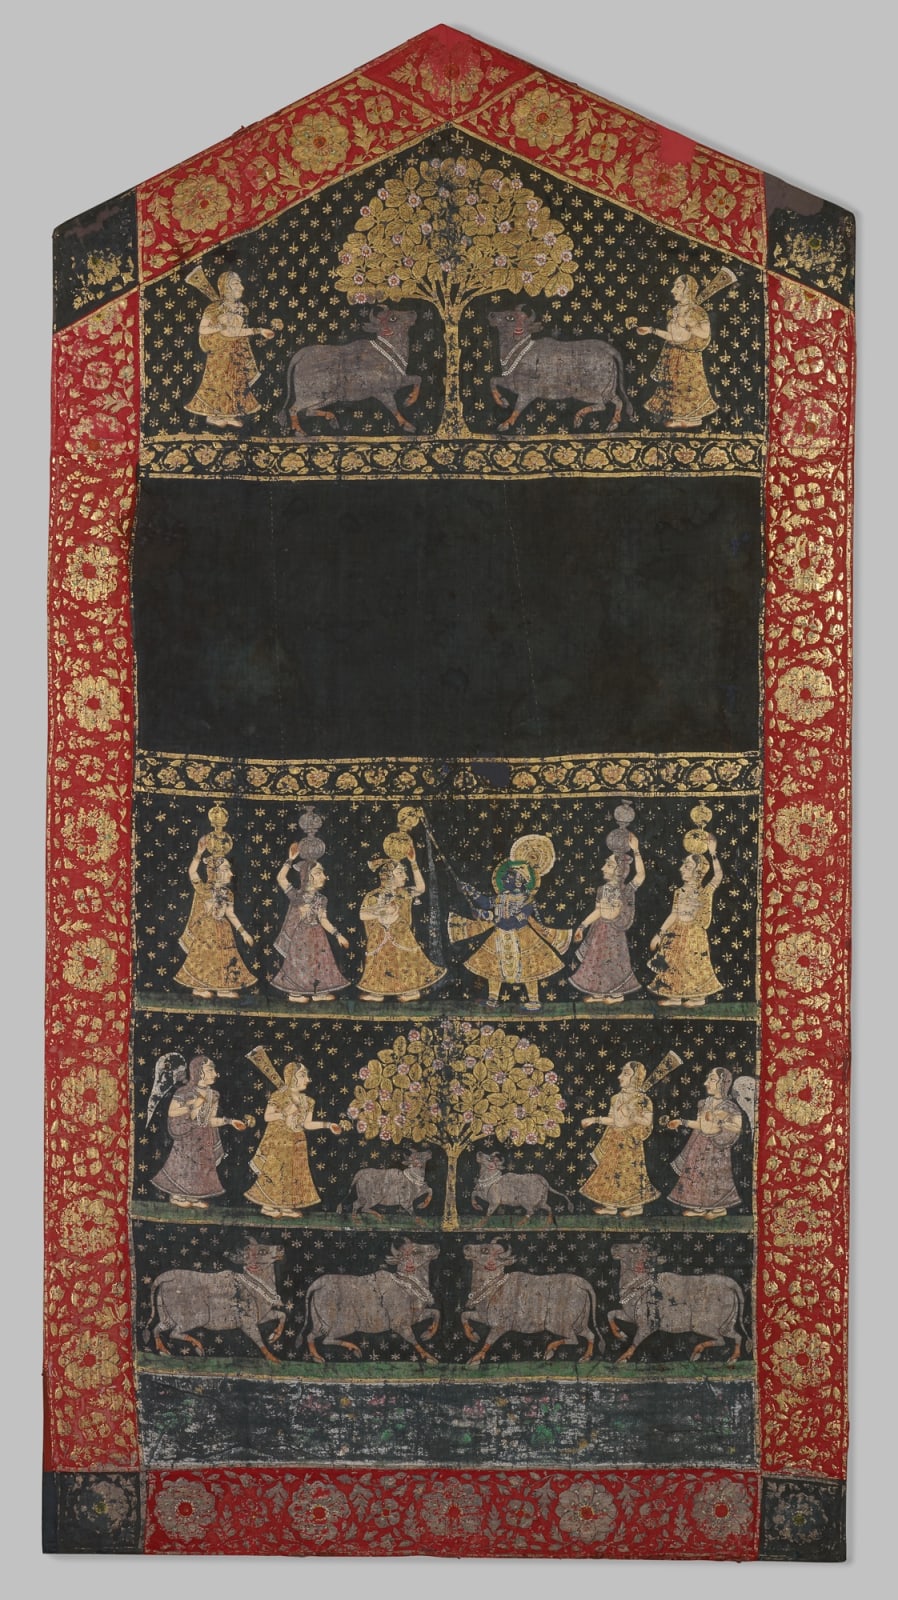 Sirhi (cloth covering the throne or Simhasana), Deccan, 1800-1850